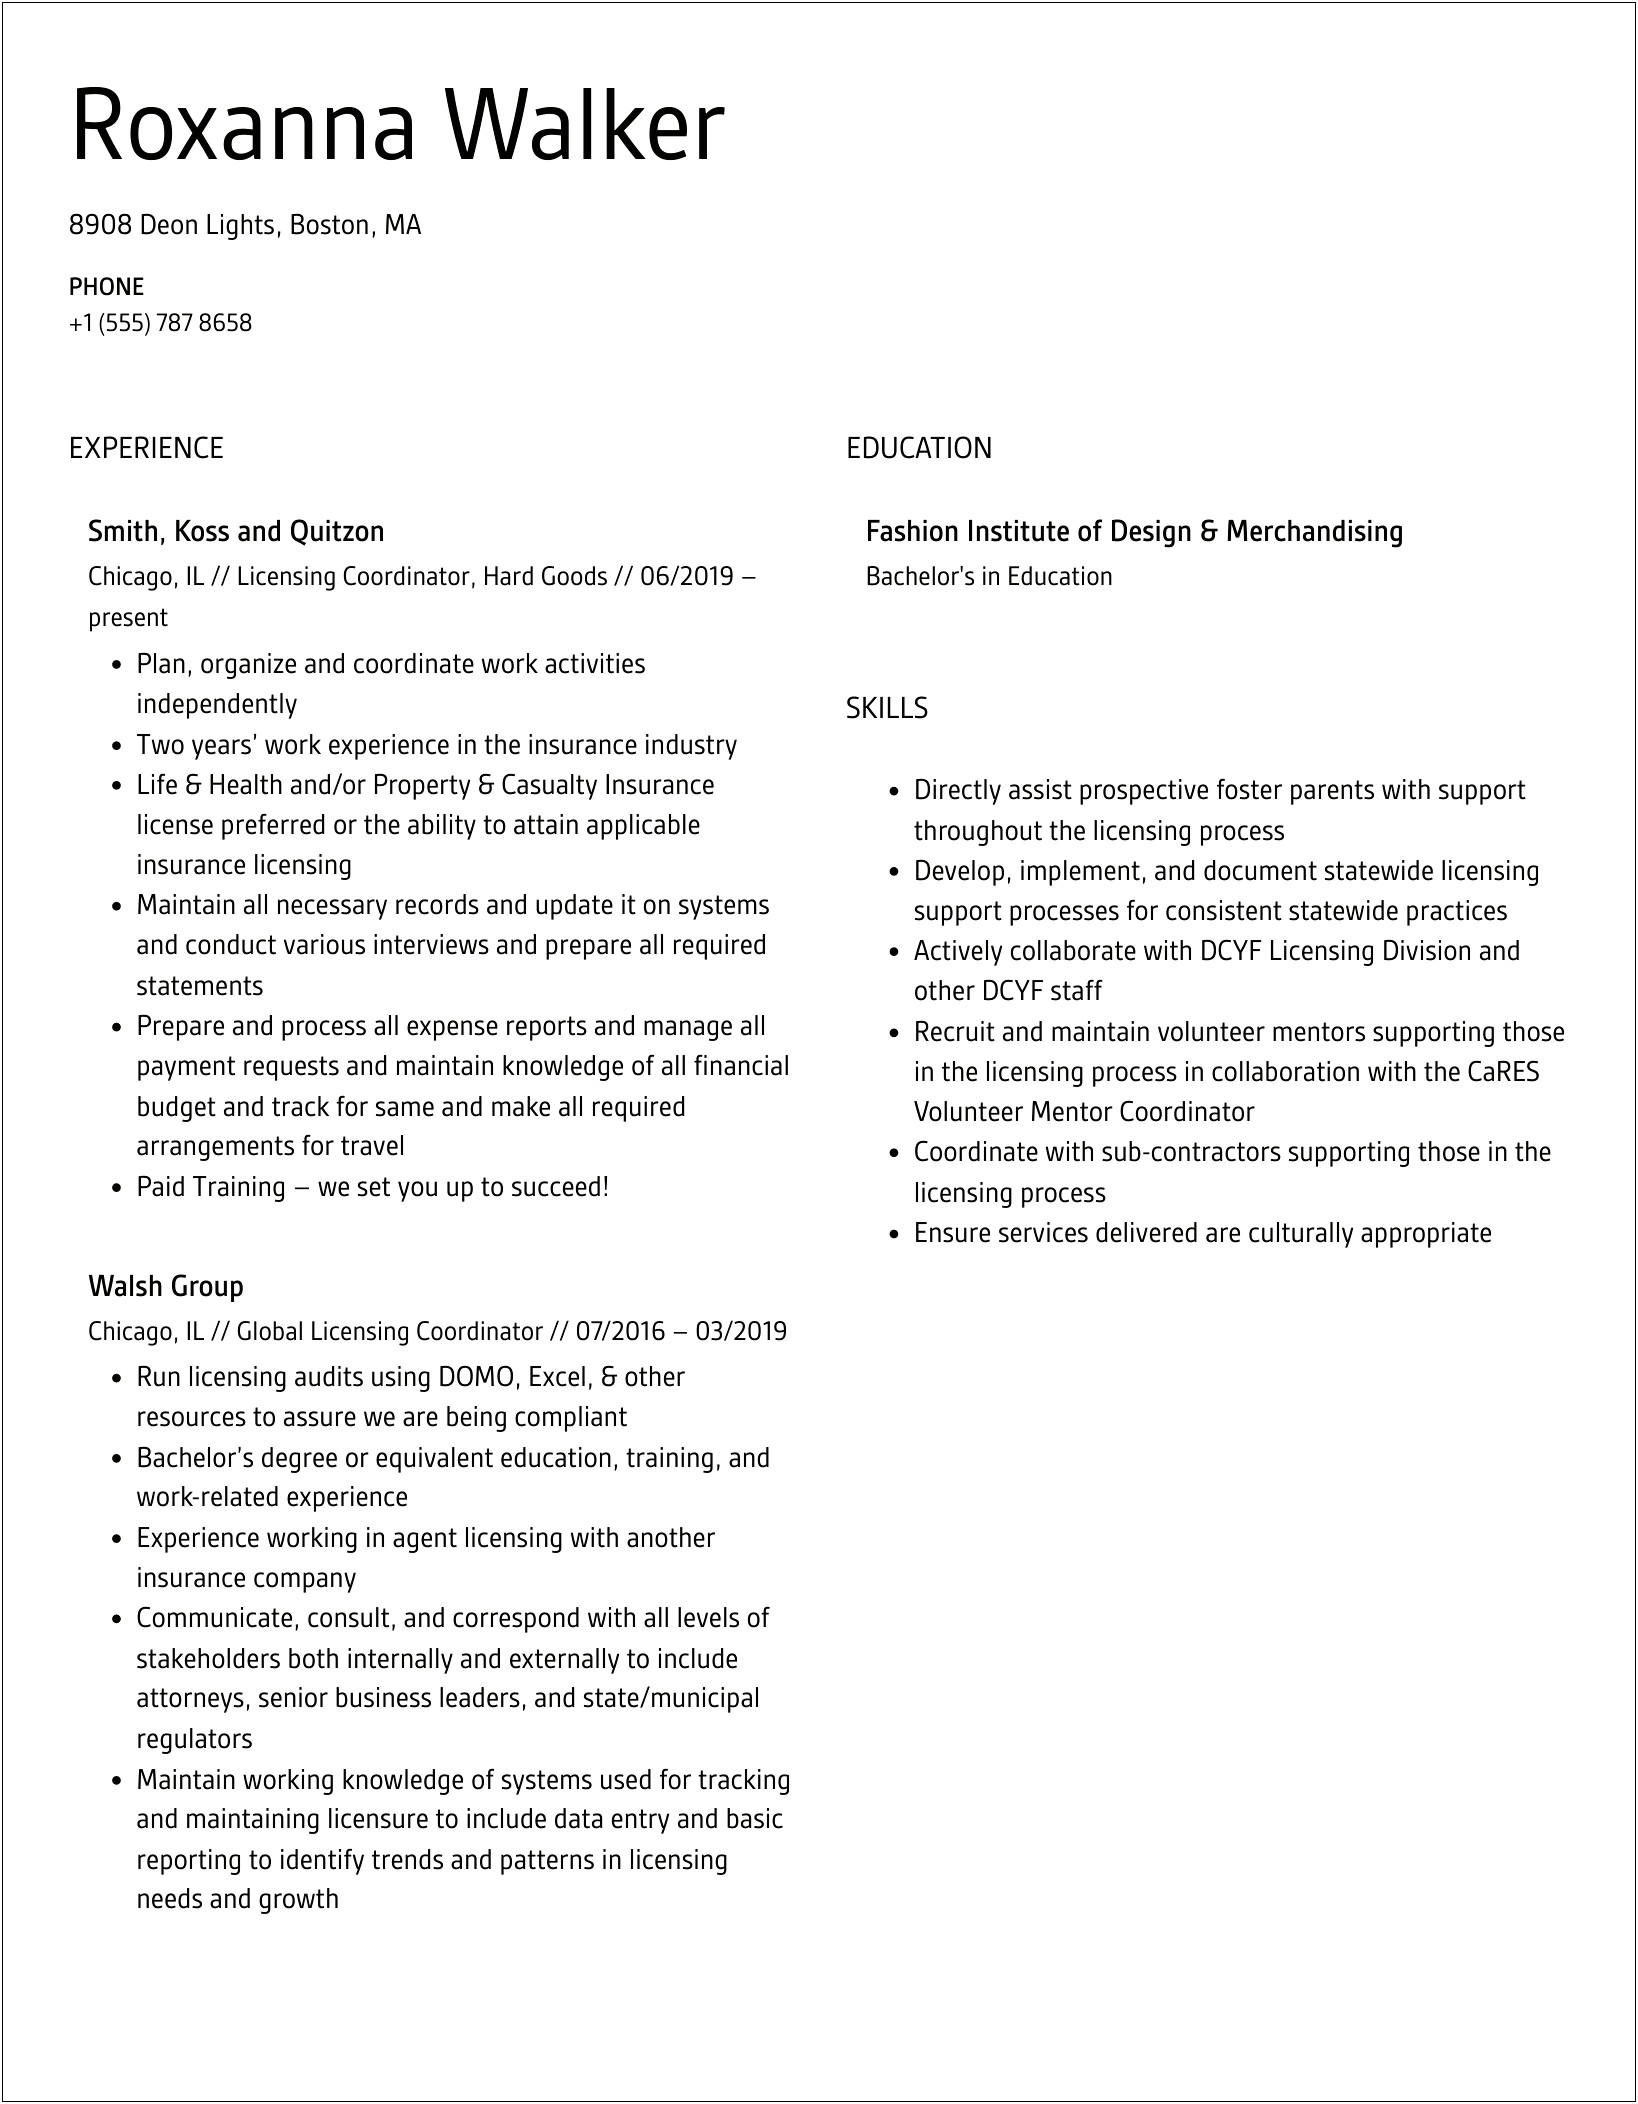 Sample Resume For Academic Licensing Coordinator